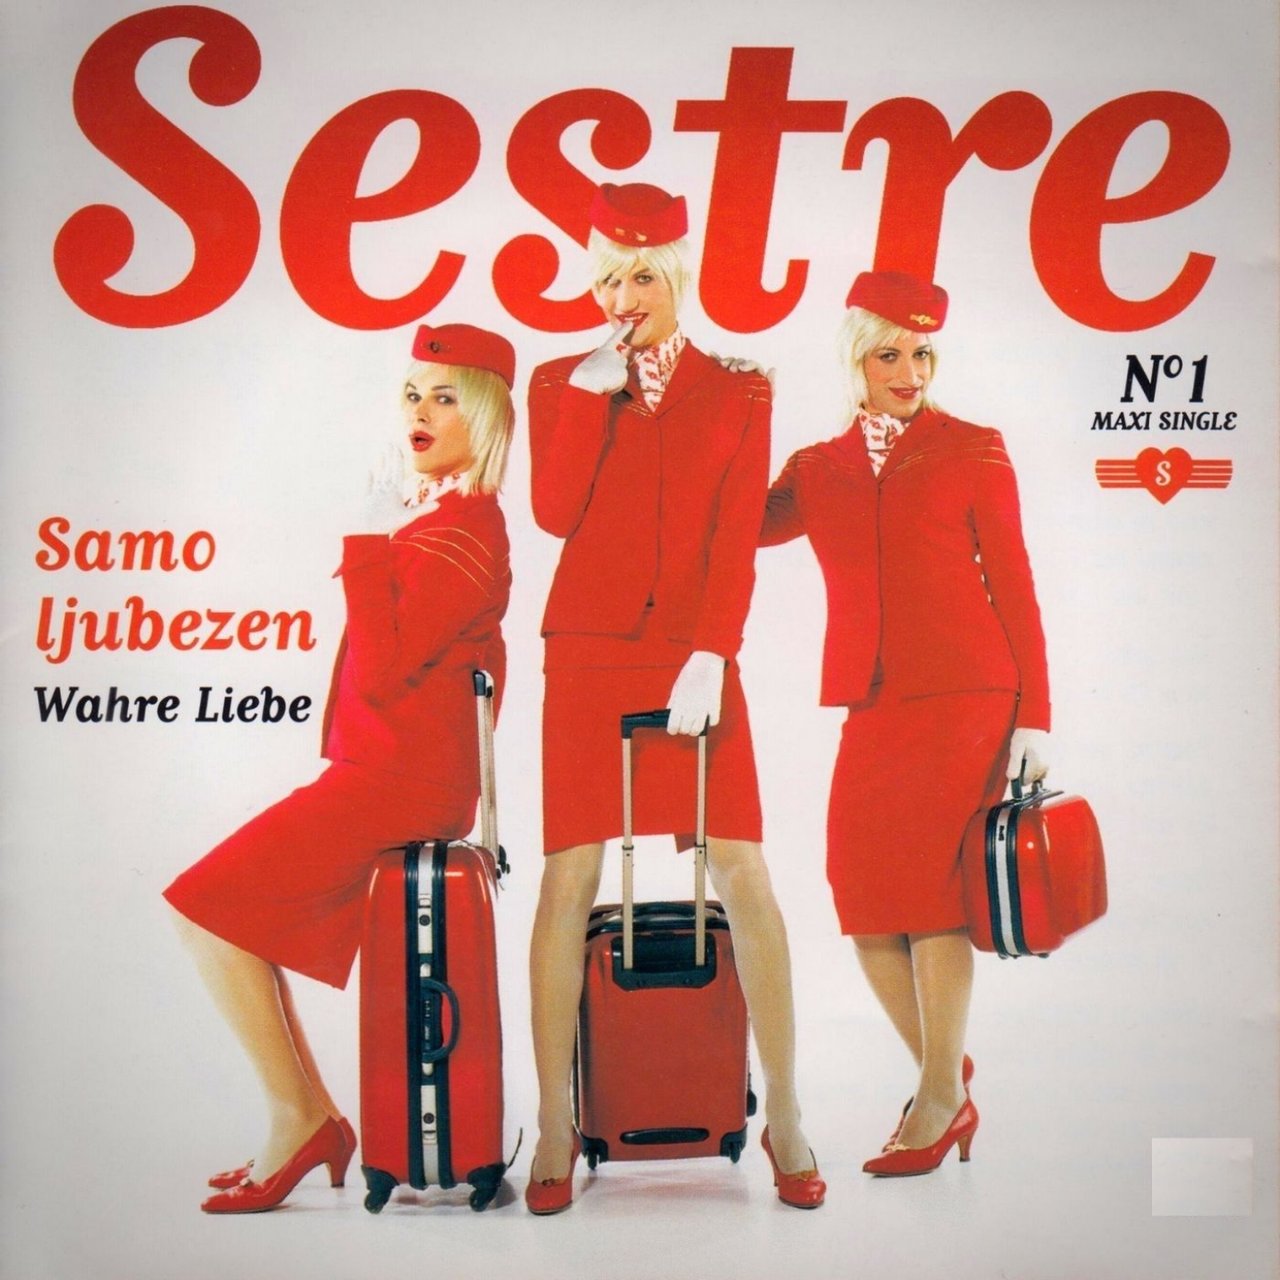 Sestre Samo ljubezen cover artwork